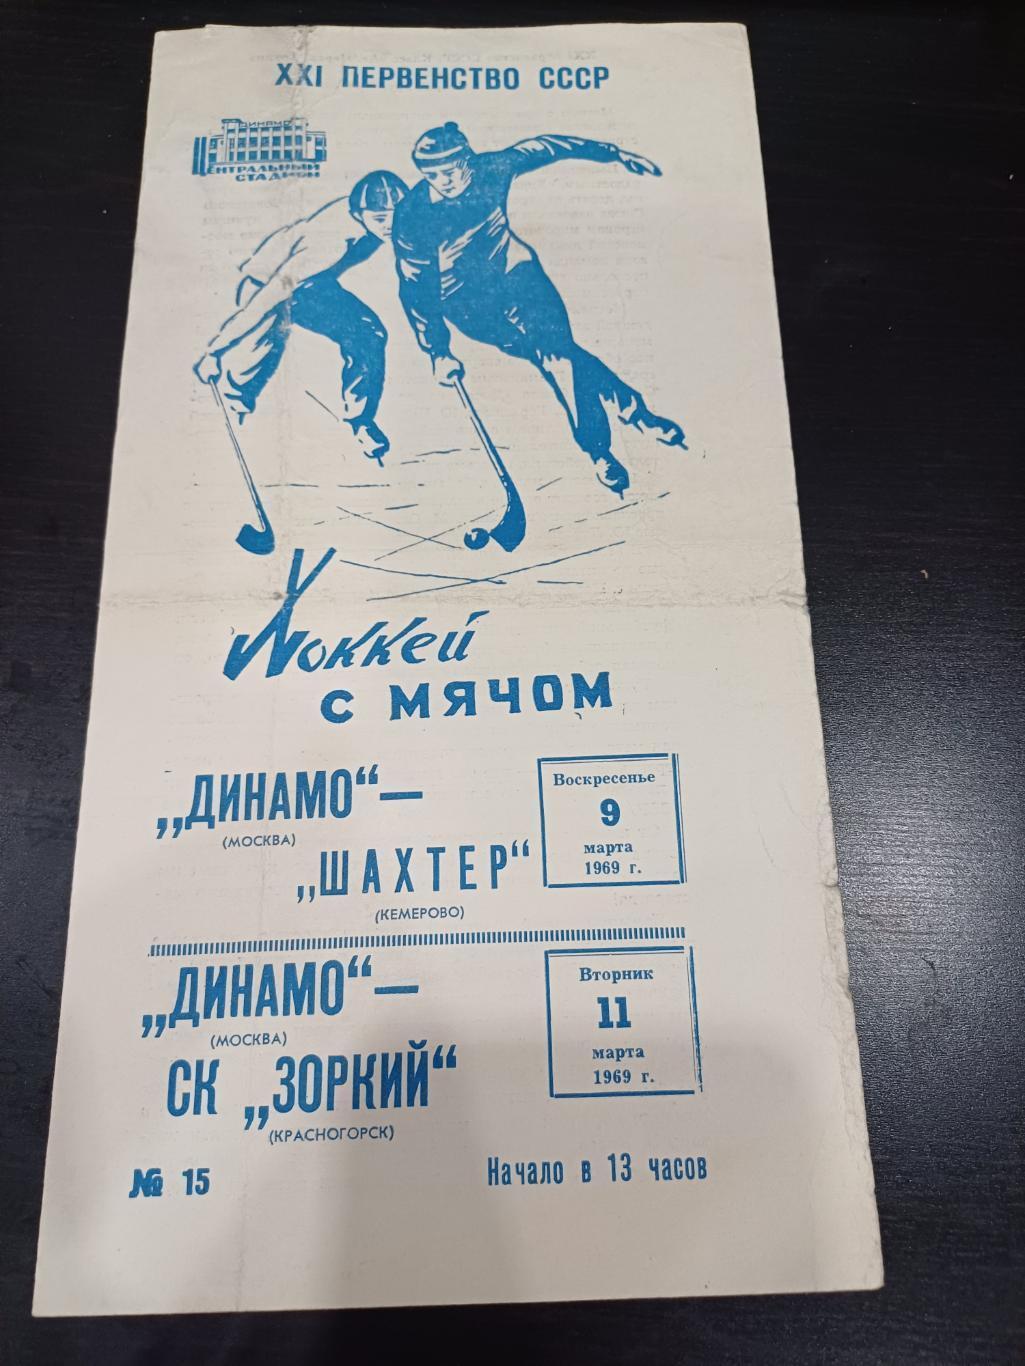 Динамо (Москва) - Шахтер (Кемерово) - Зоркий (Красногорск) 1969